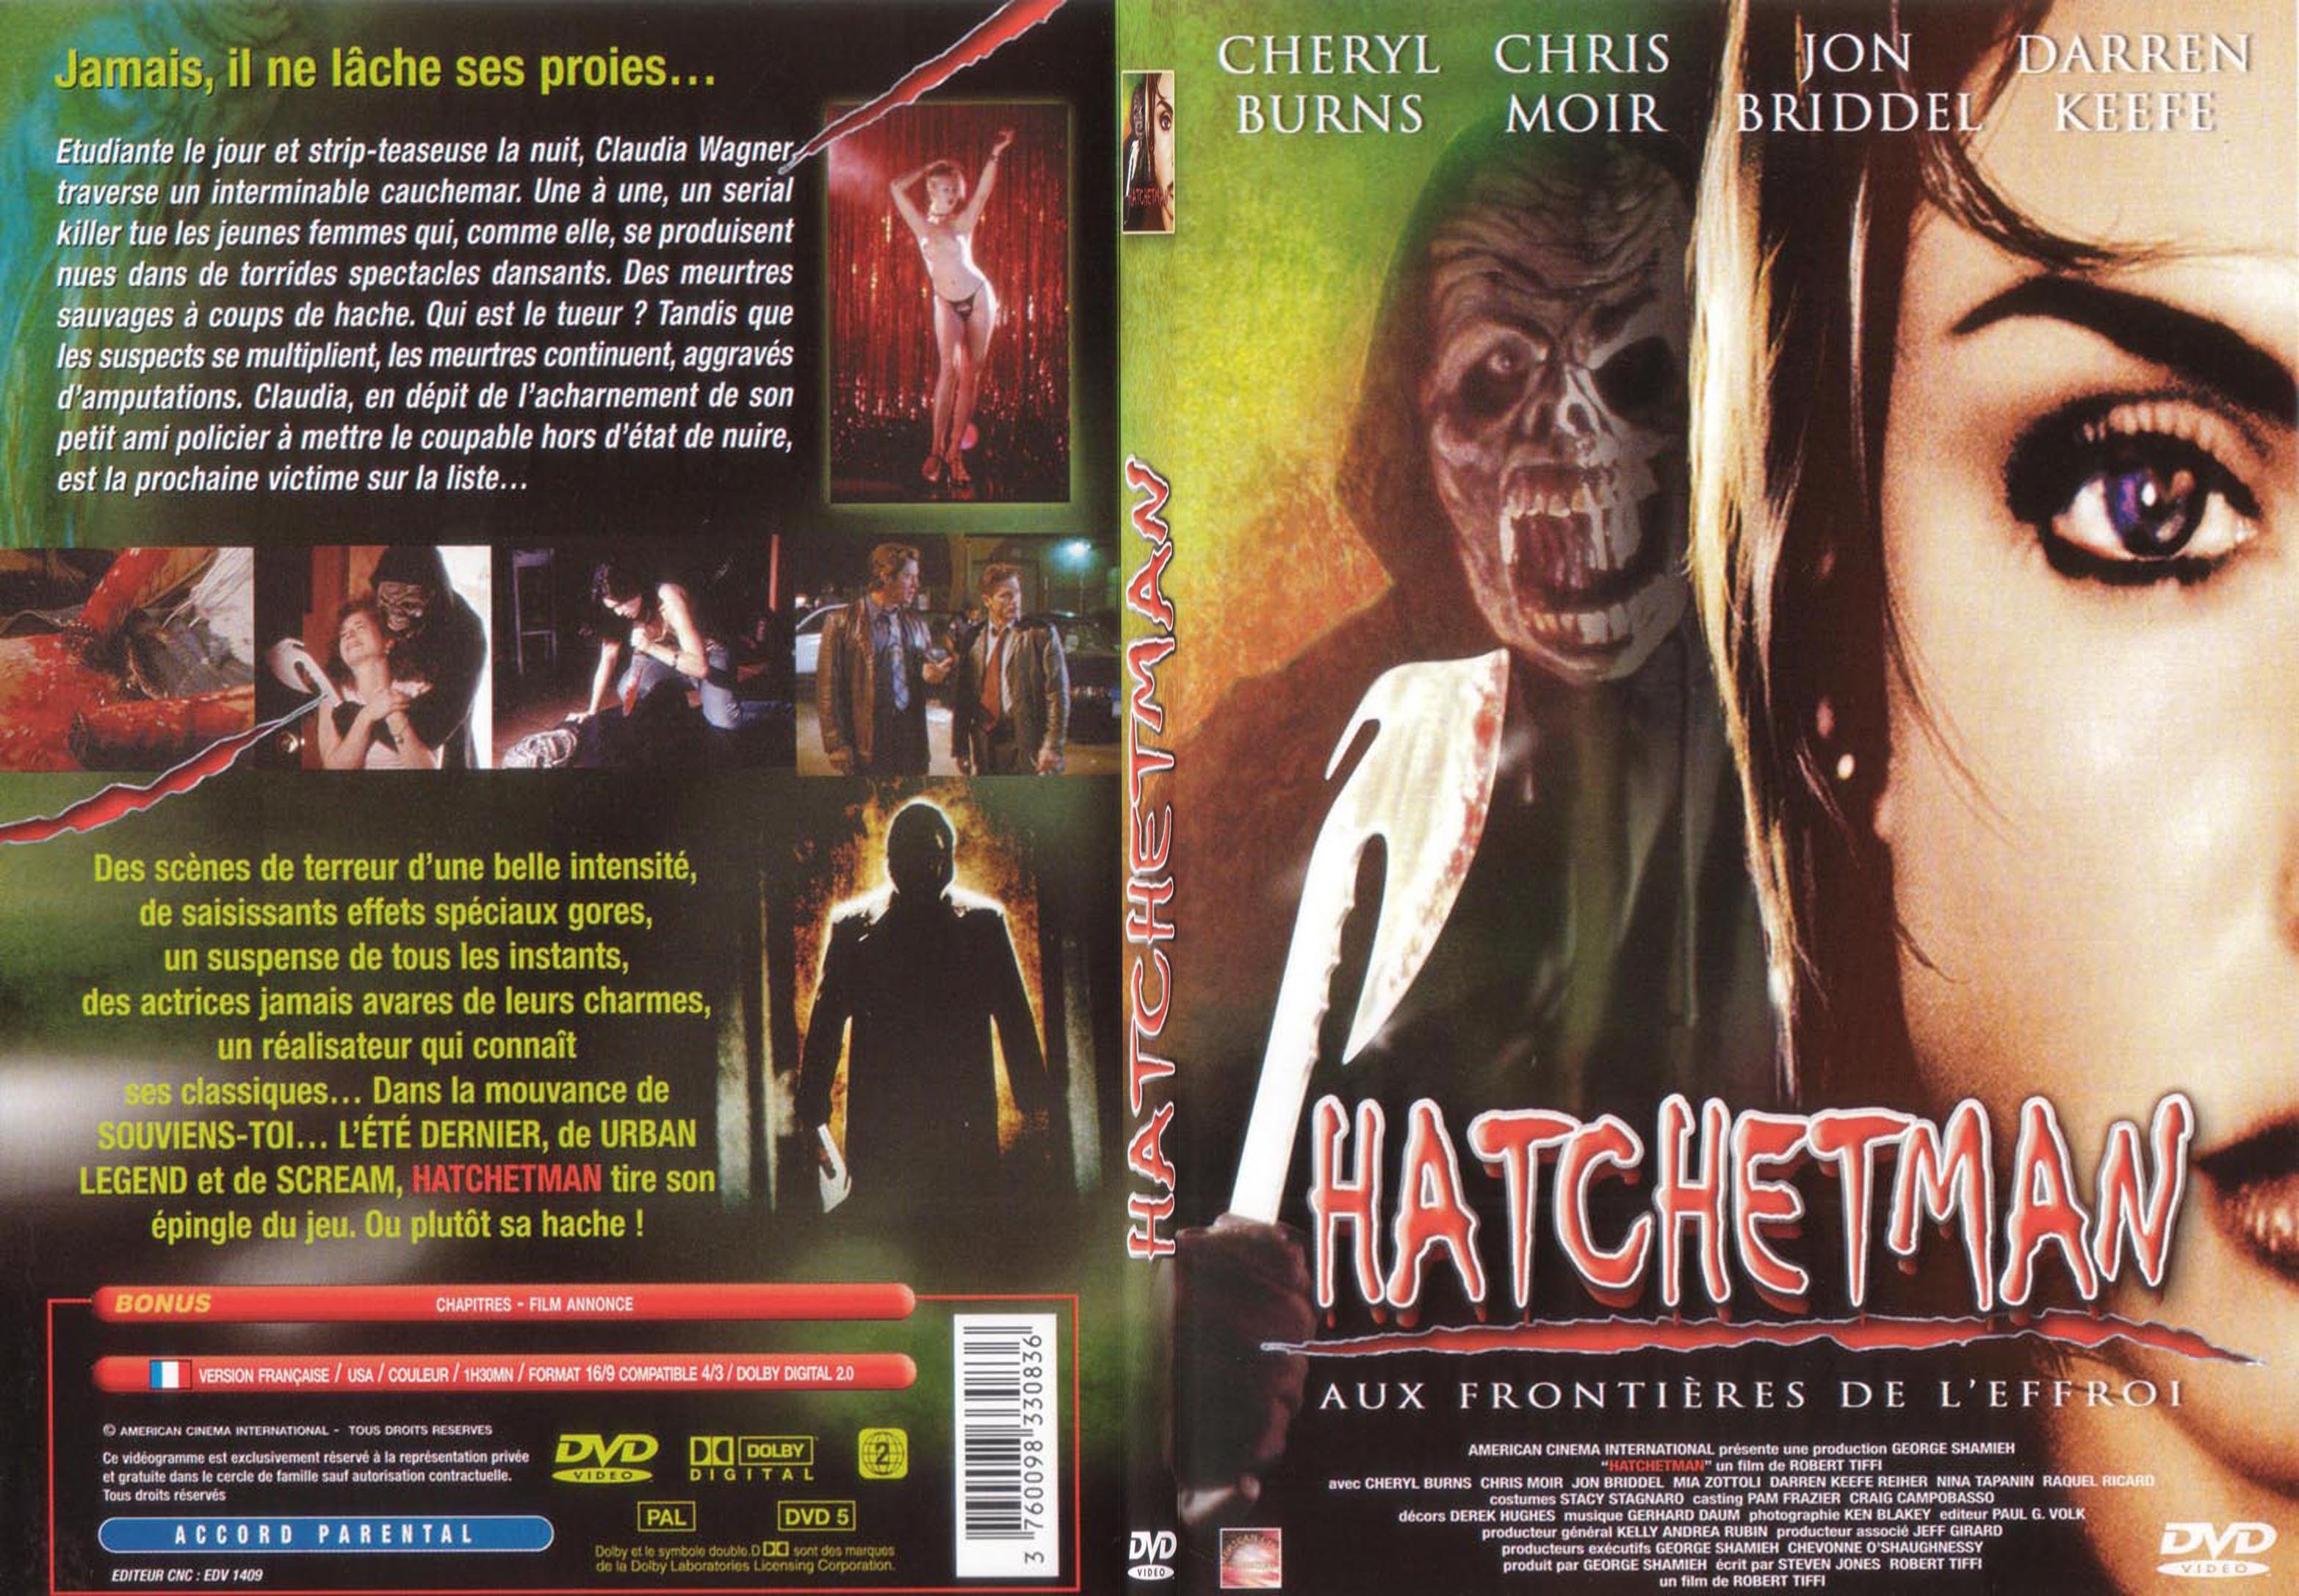 Jaquette DVD Hatchetman - SLIM